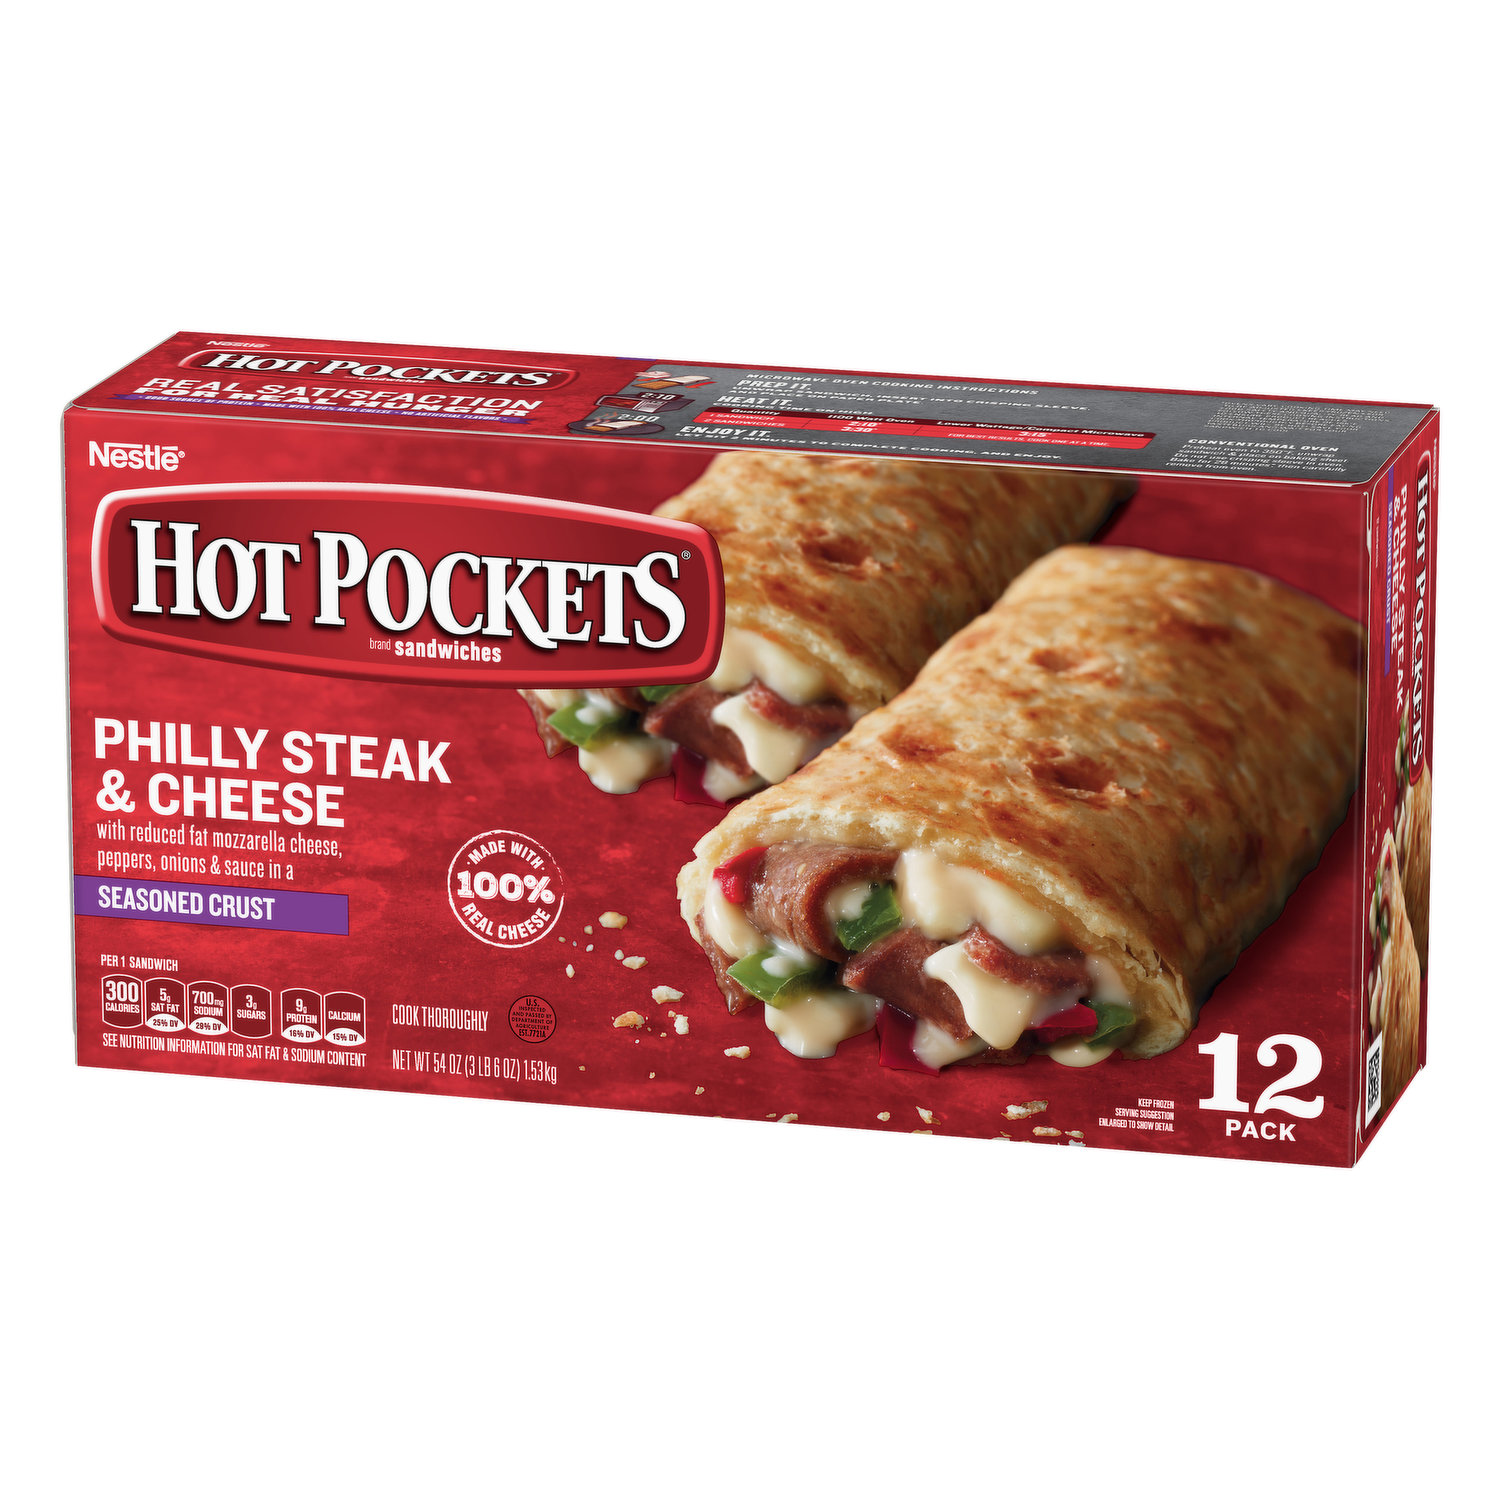 Hot Pockets Sandwiches, Ham, Egg & Cheese, 2 Pack